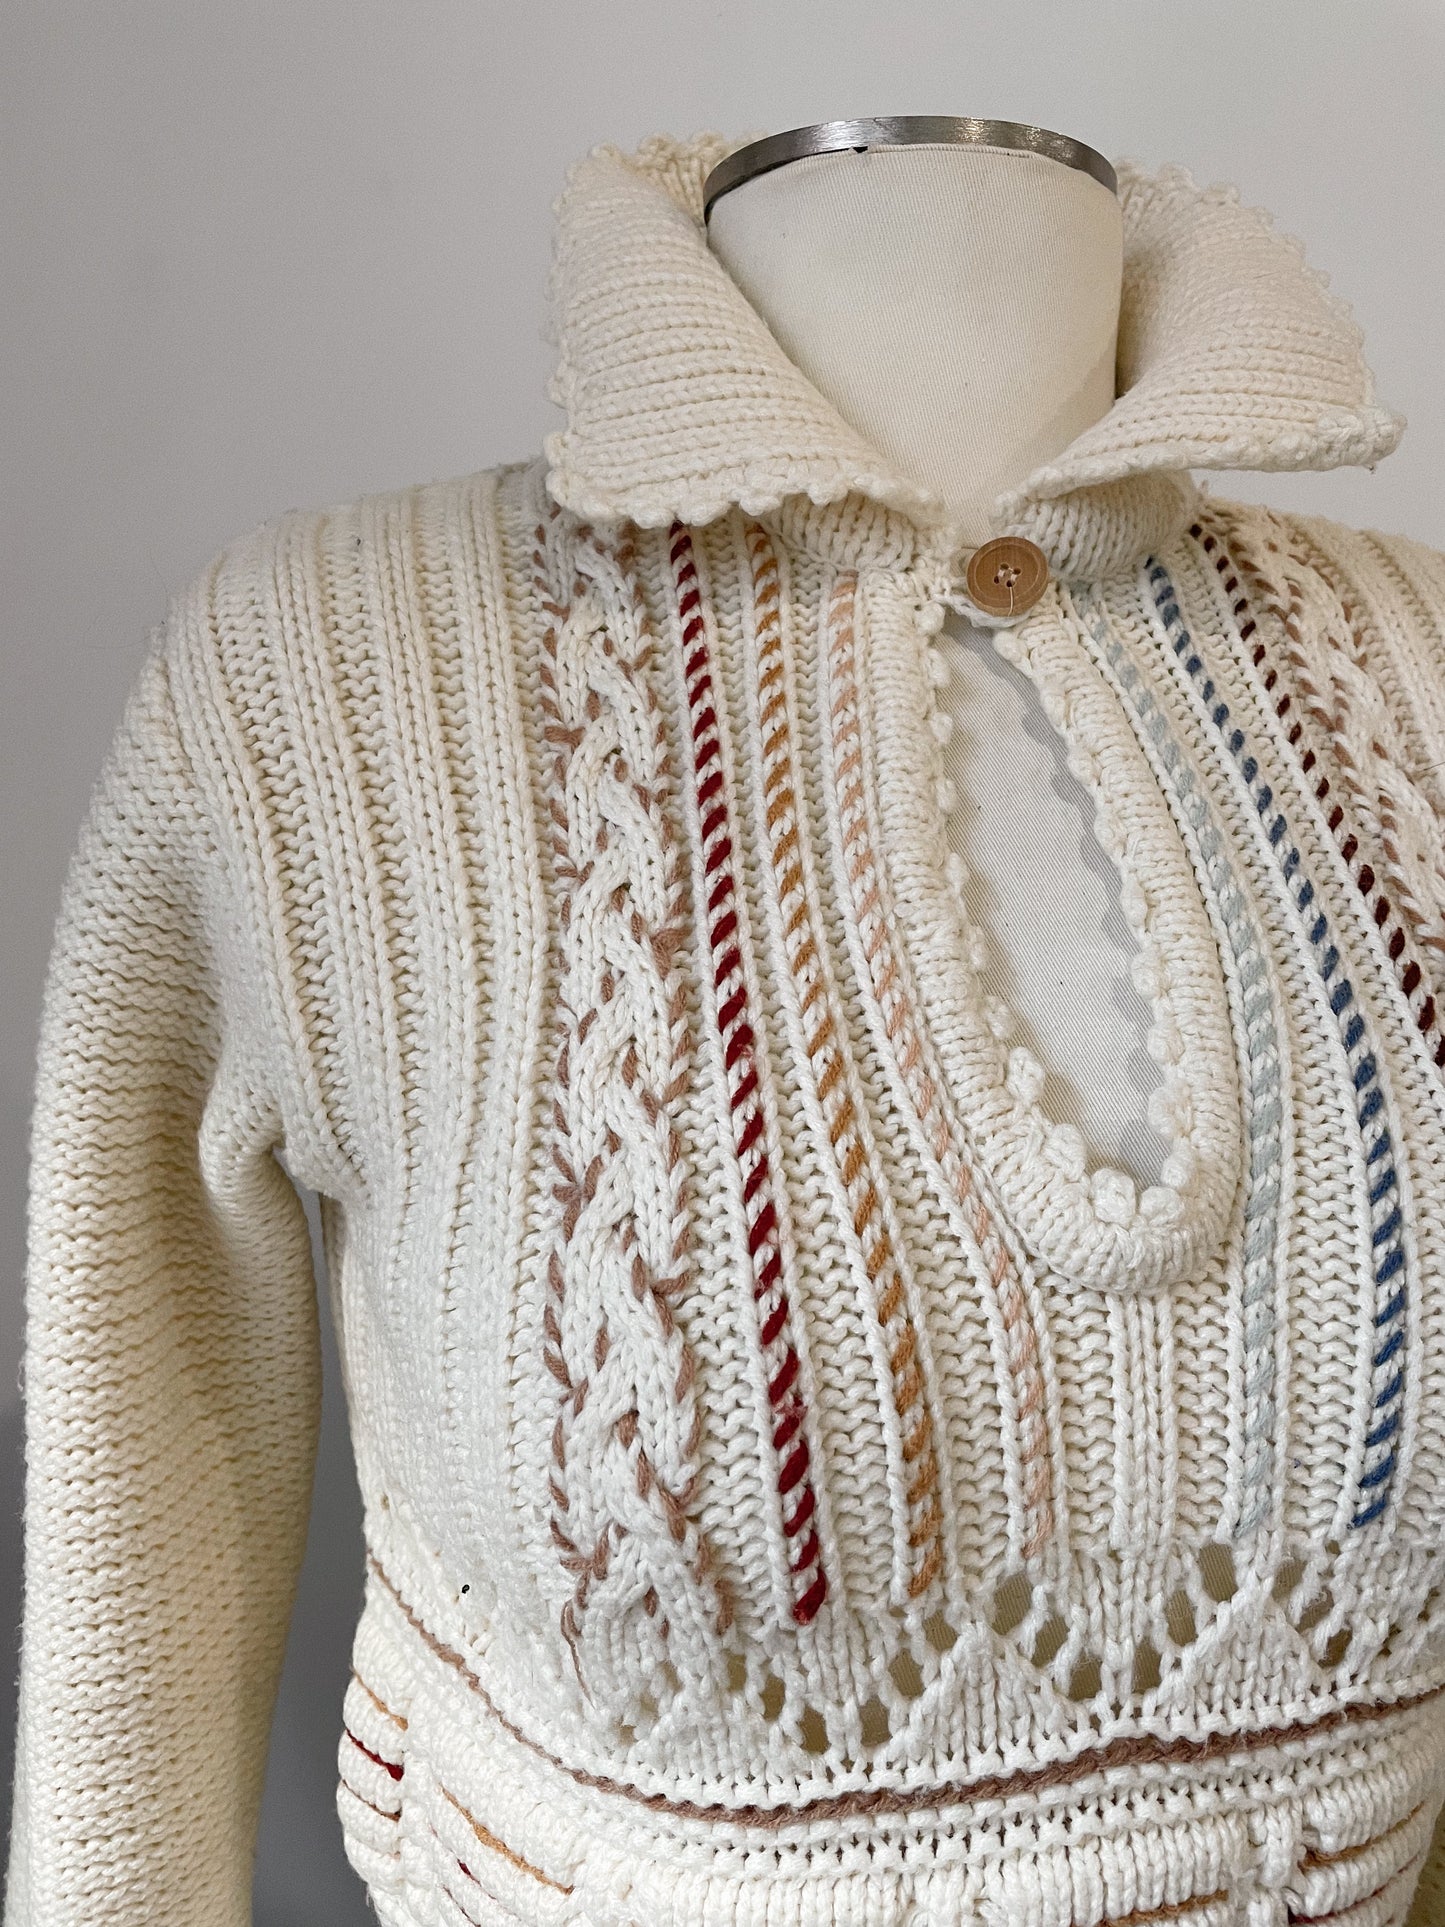 70s-Inspired Farrah Keyhole Sweater